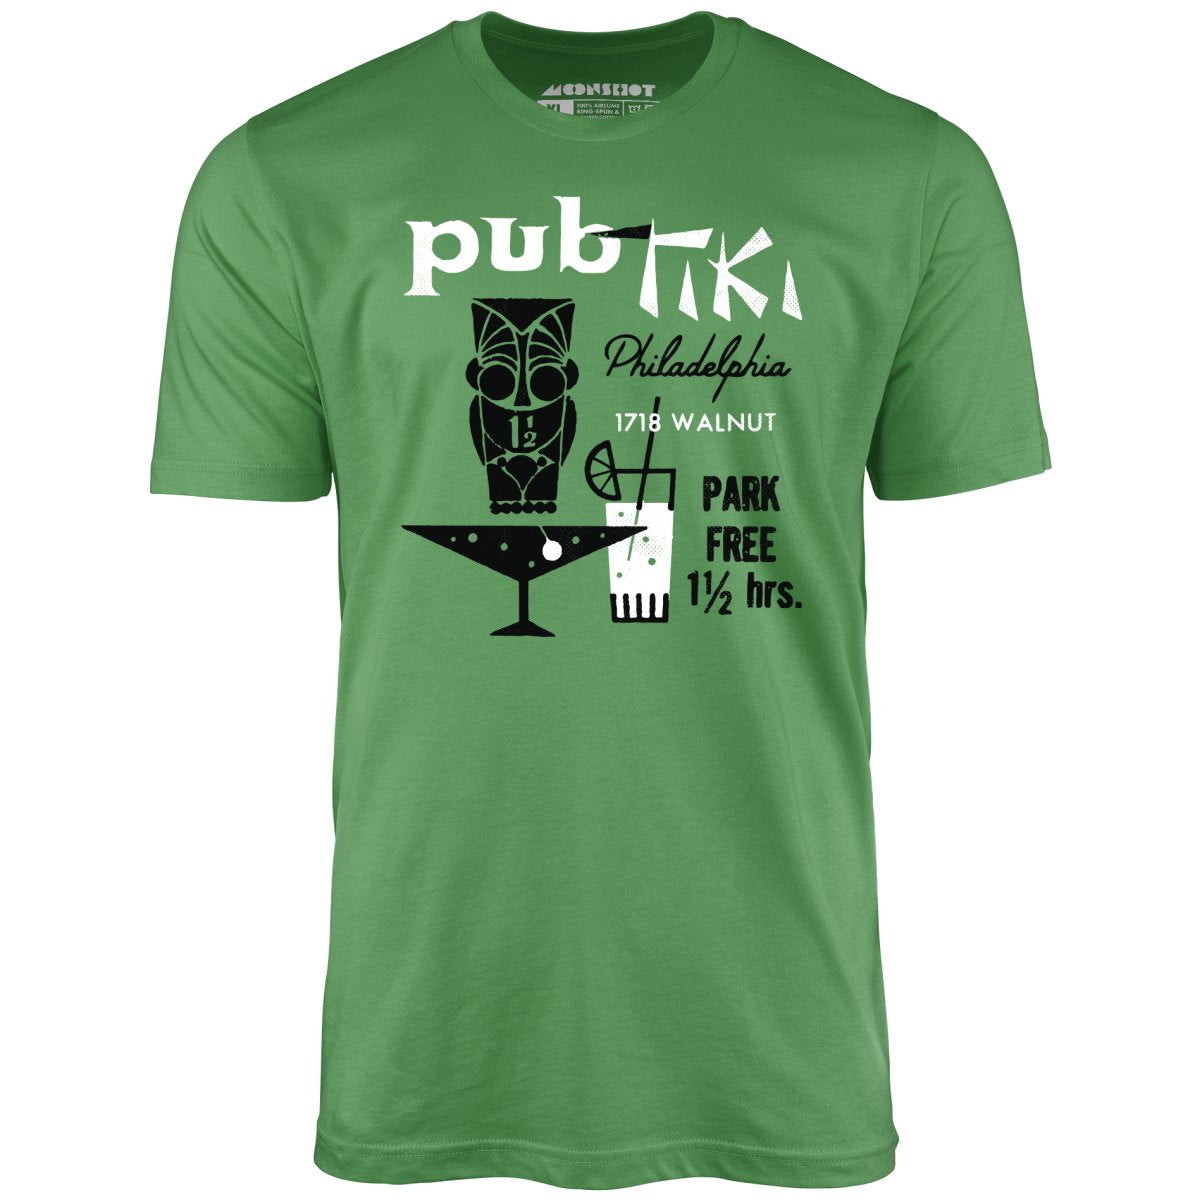 Pub Tiki - Philadelphia, PA - Vintage Tiki Bar - Unisex T-Shirt